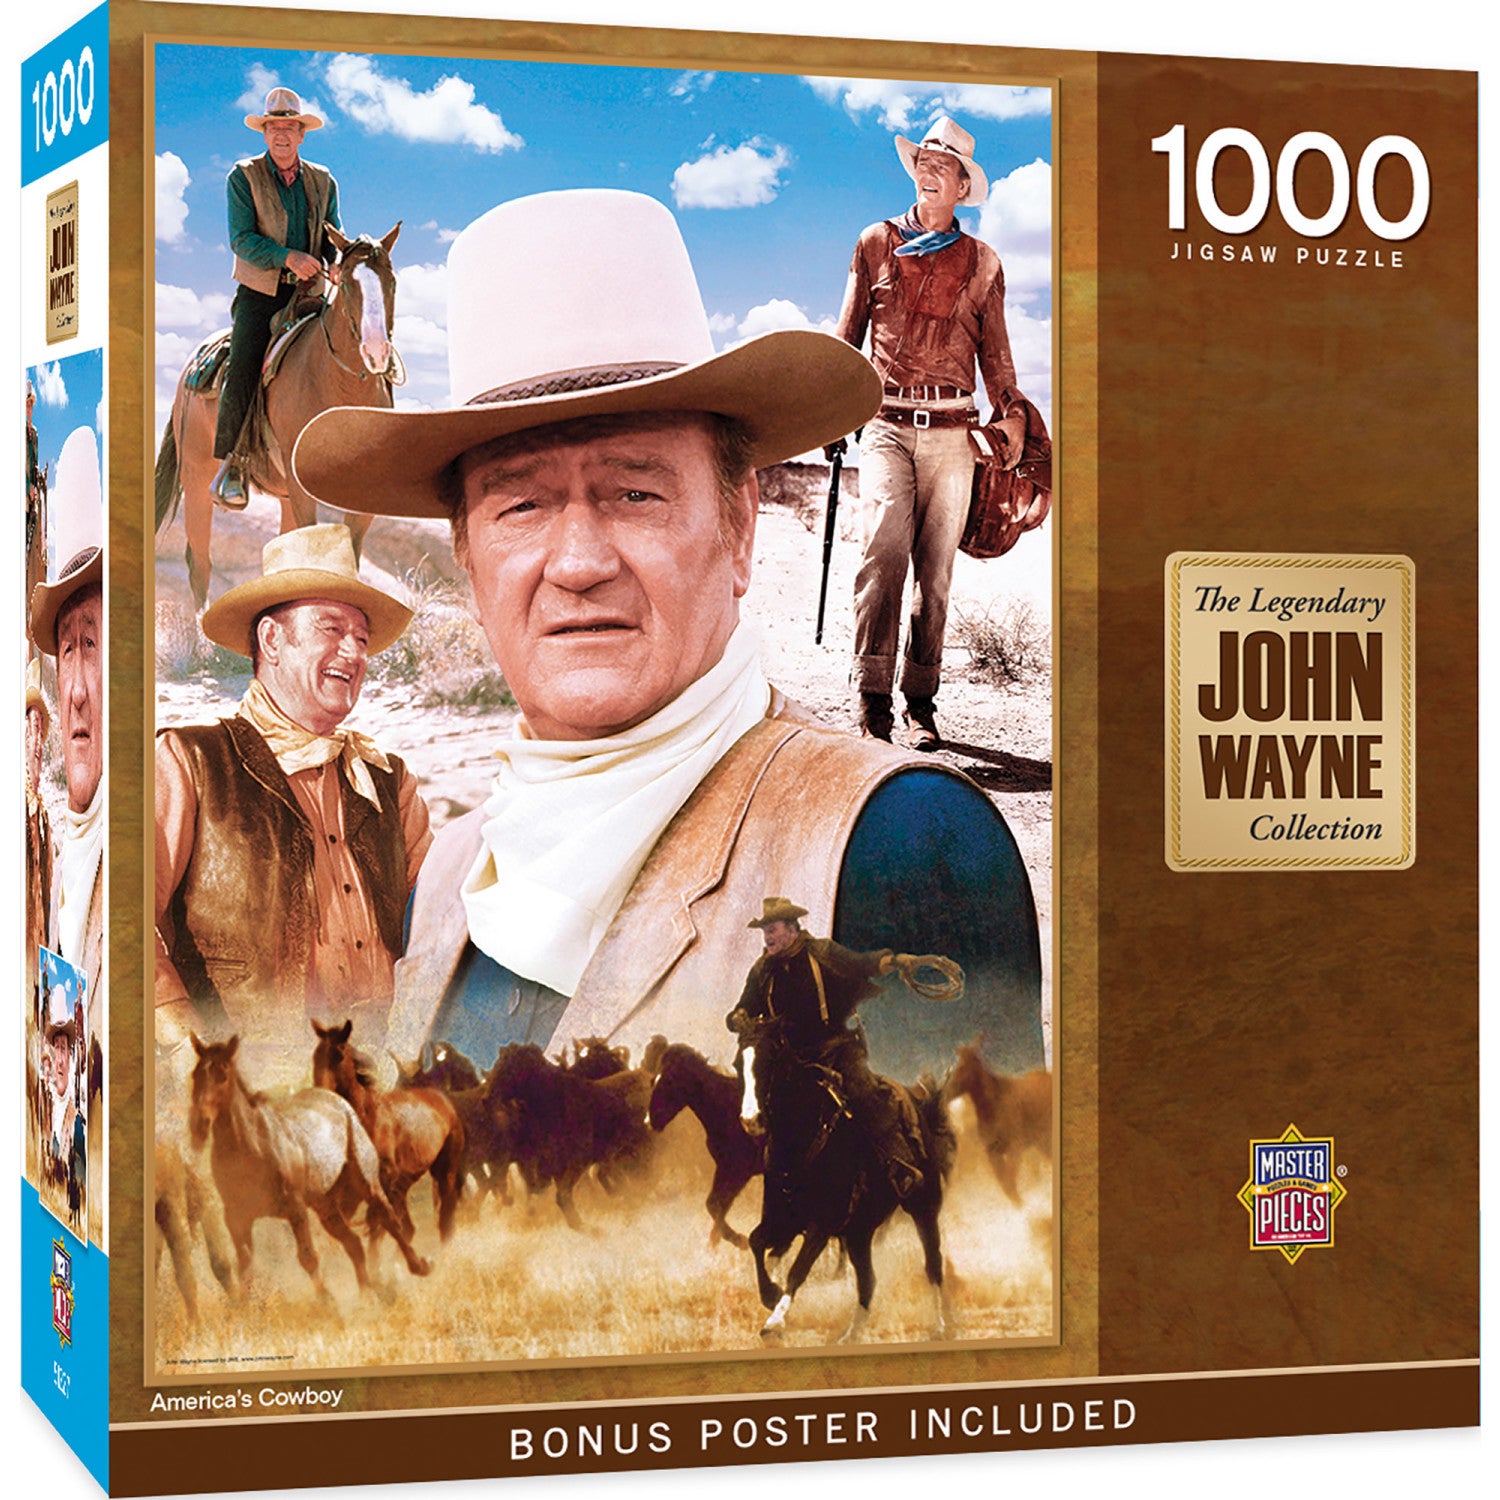 John Wayne Collection - America's Cowboy 1000 Piece Jigsaw Puzzle